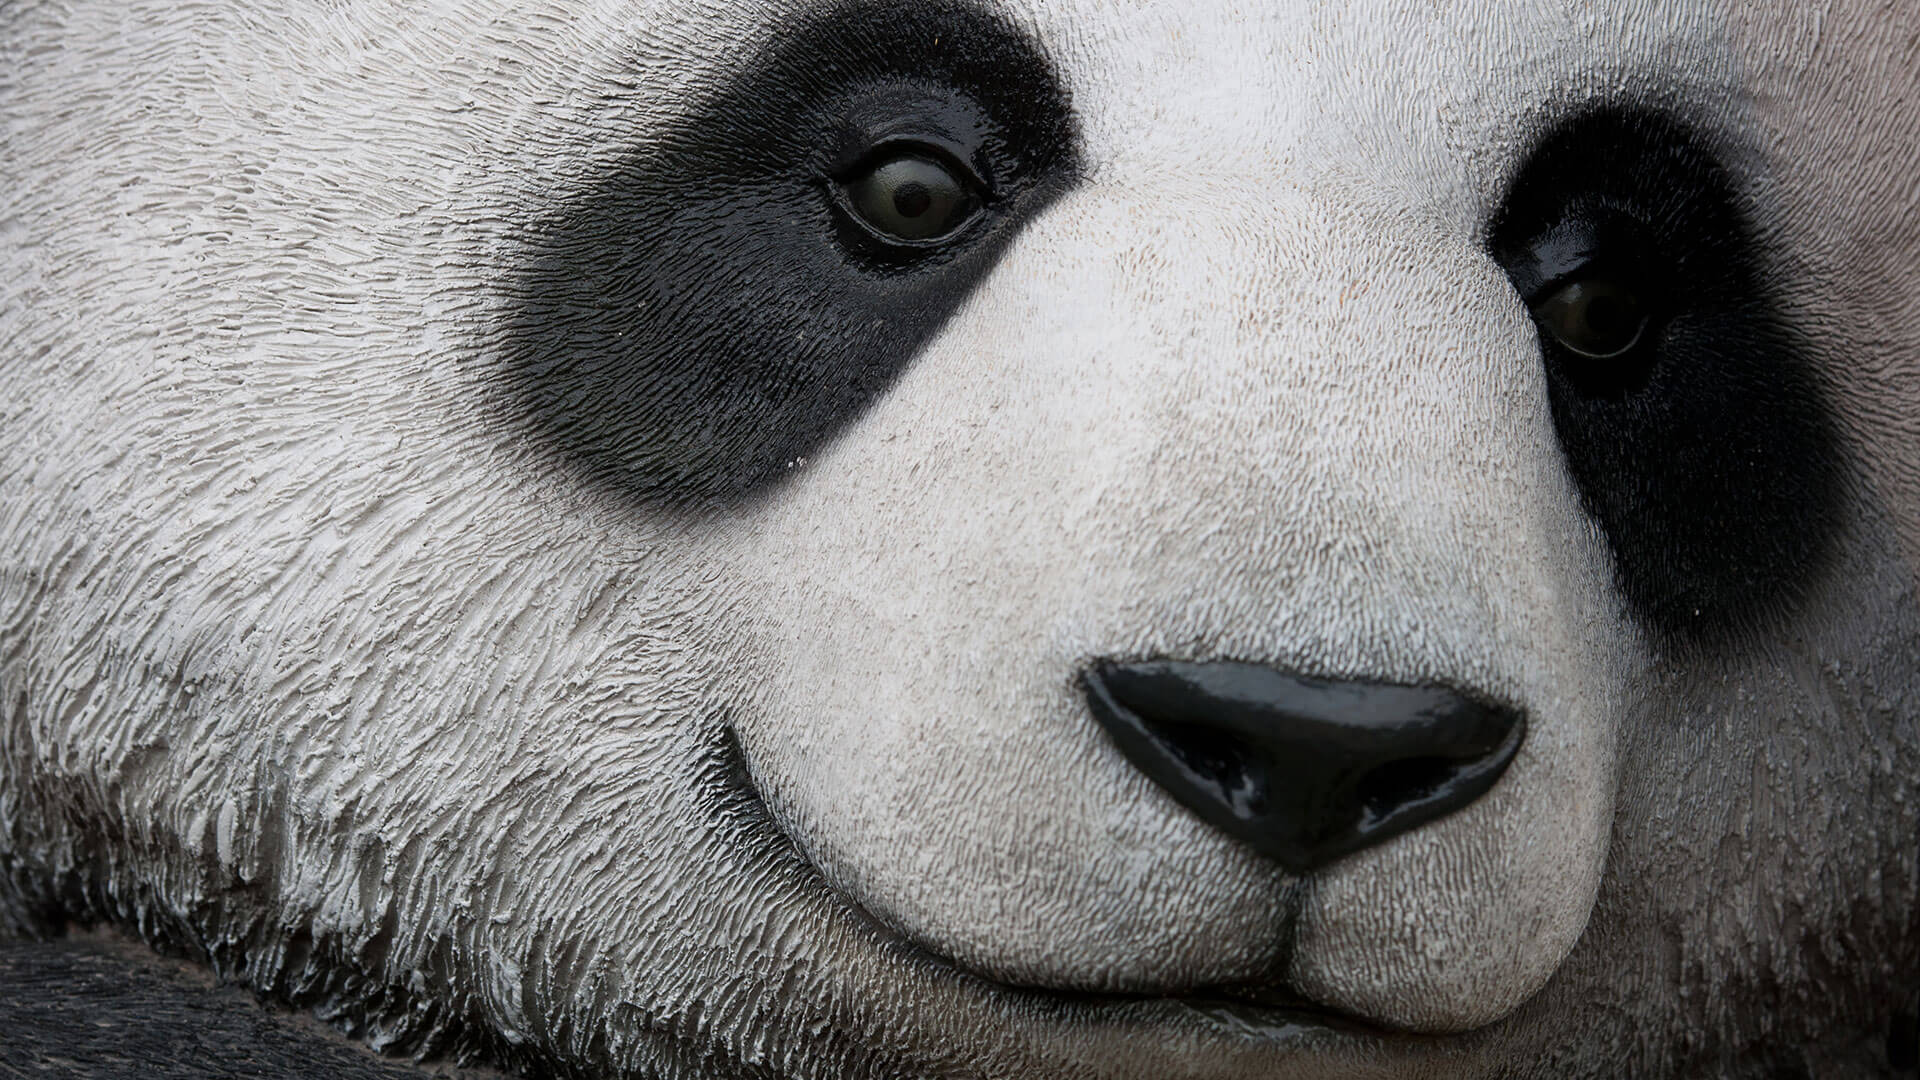 Panda Face Ss - Close Up Picture Of Panda - HD Wallpaper 